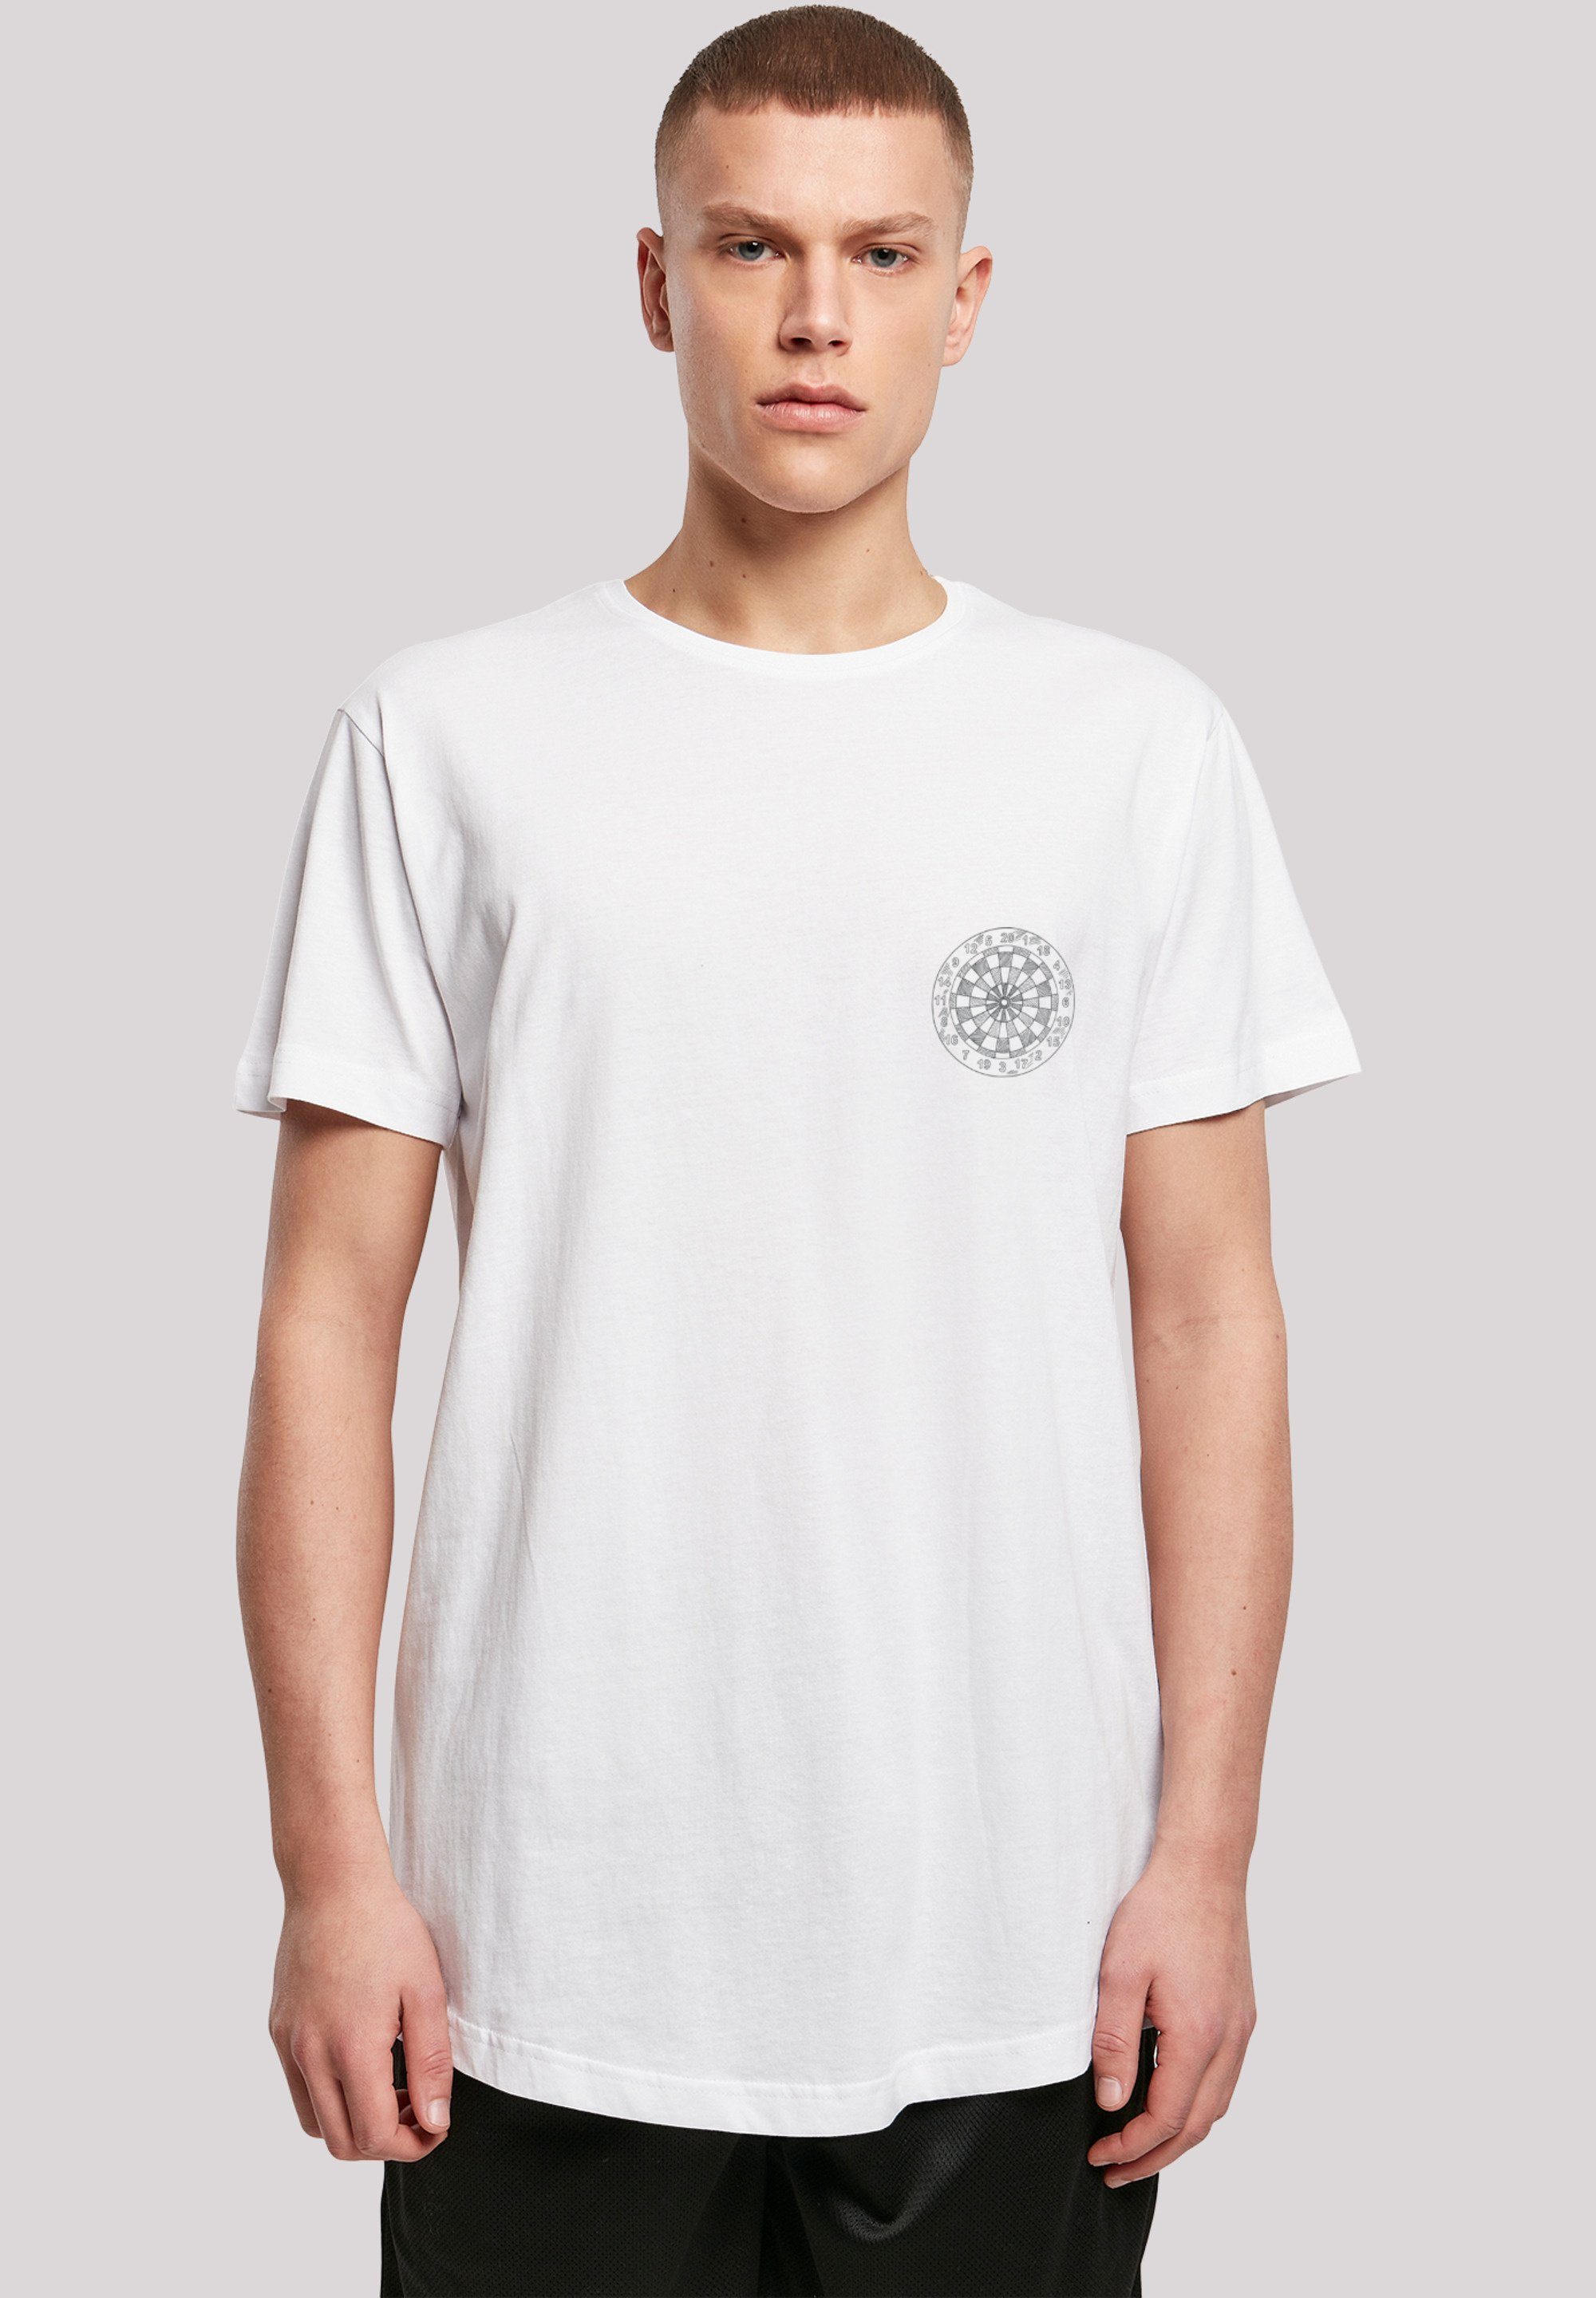 Darts Board Dartscheibe T-Shirt weiß Print F4NT4STIC